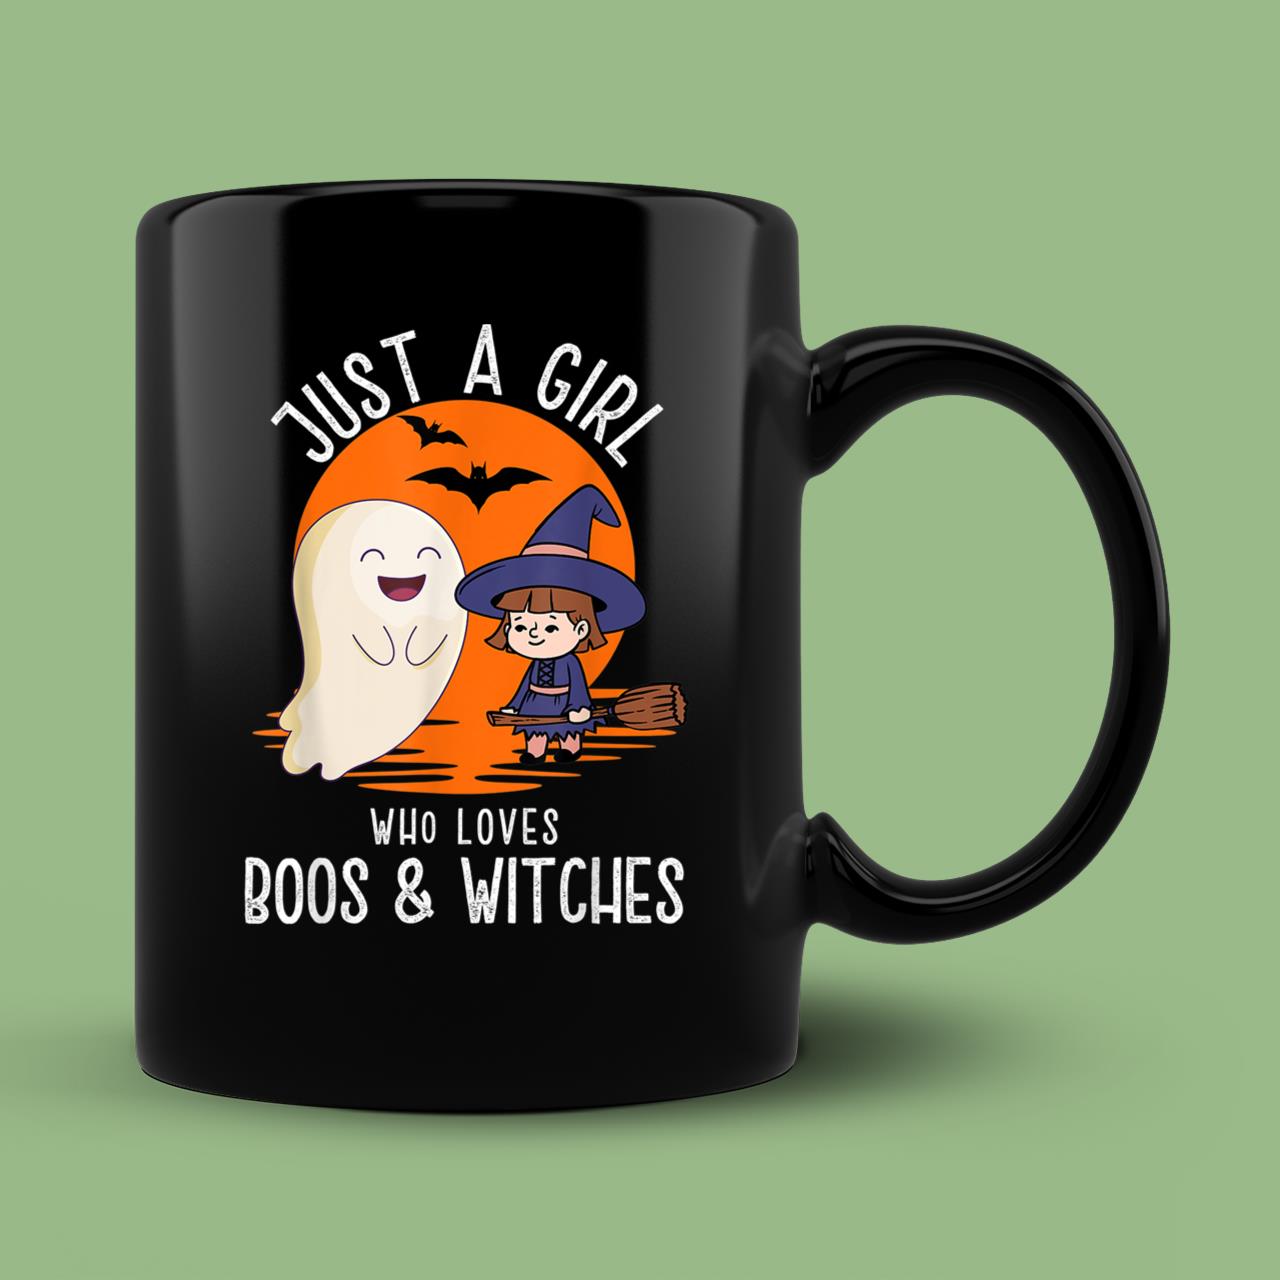 Skitongift Spooky Ceramic Novelty Coffee Mug Cute Halloween Boos And Witches Mug